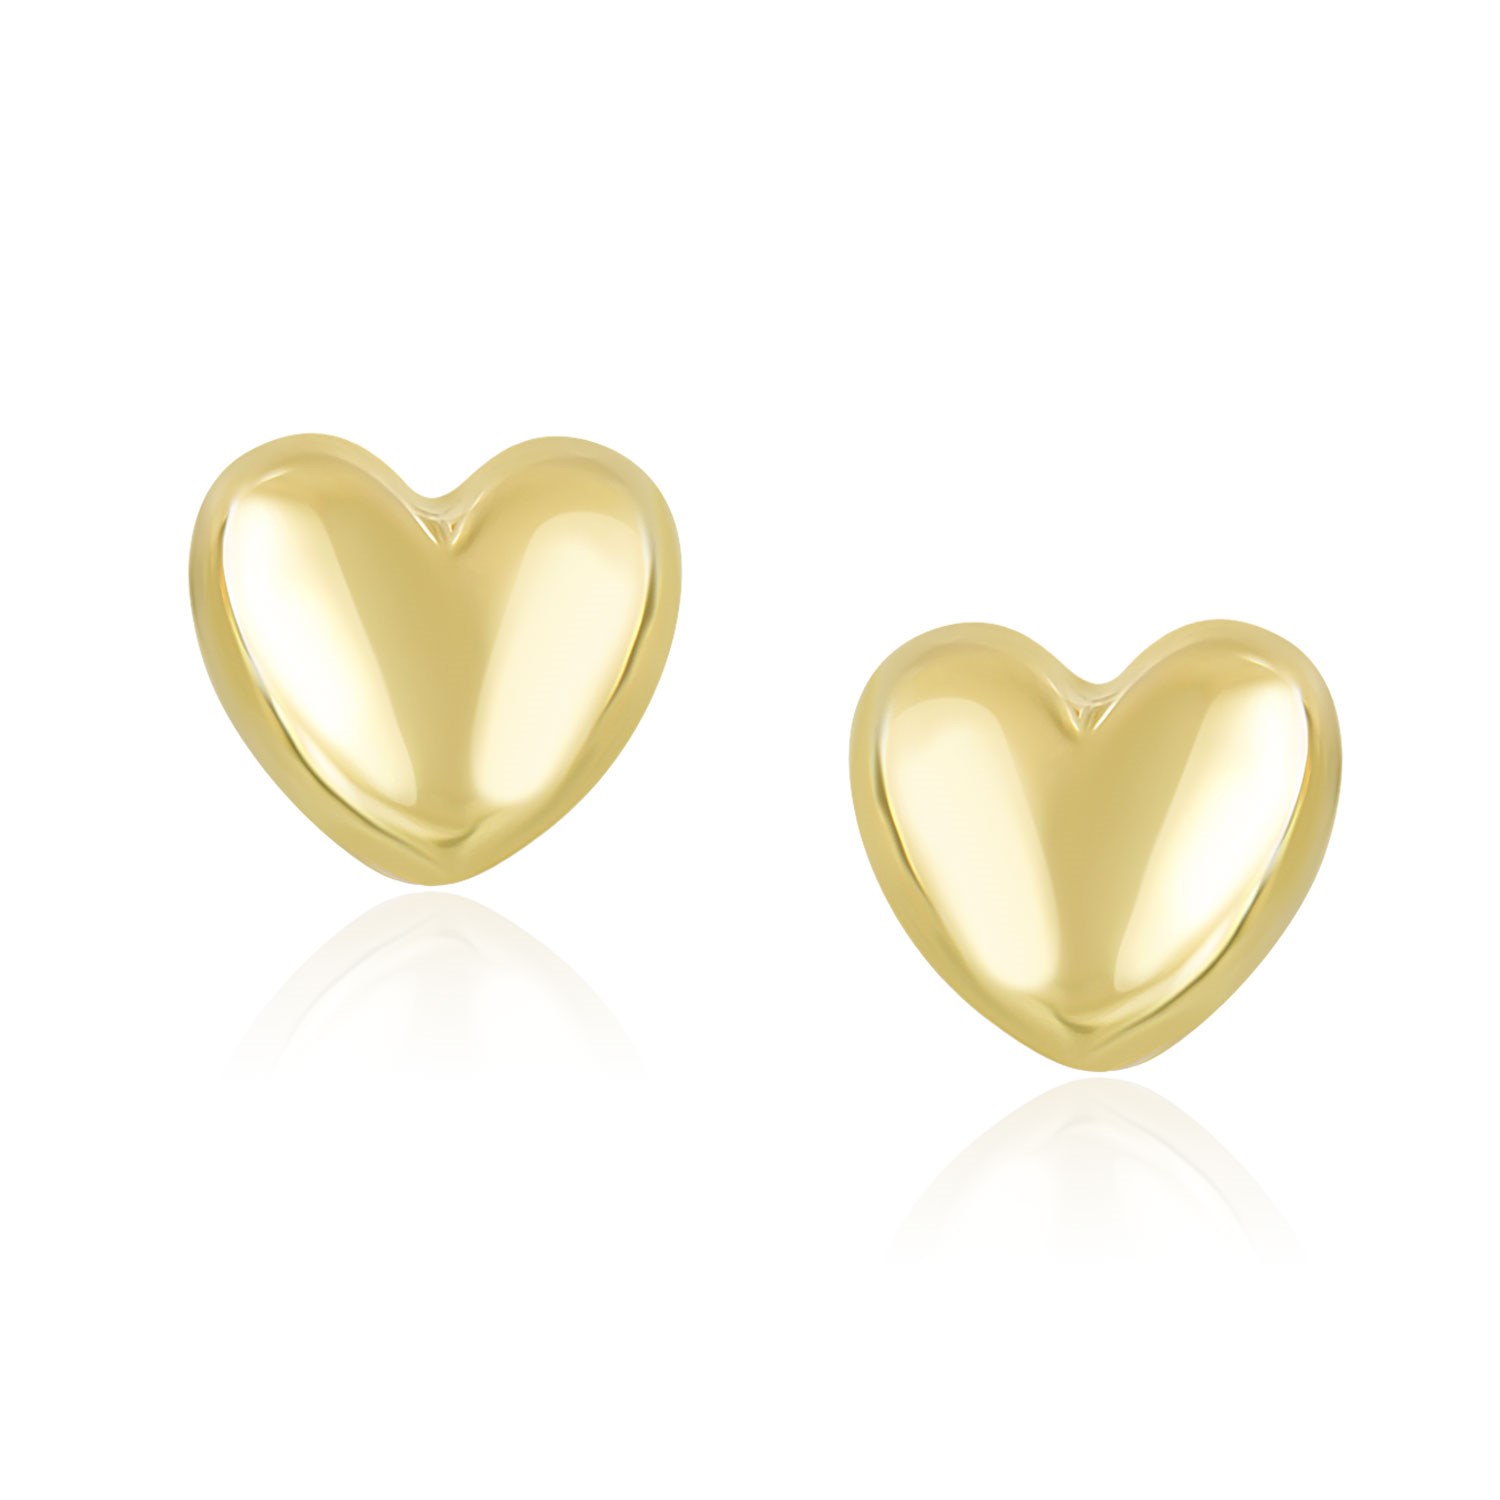 Polished Puffed Heart Earrings in 14k Yellow Gold - Richard Cannon Jewelry